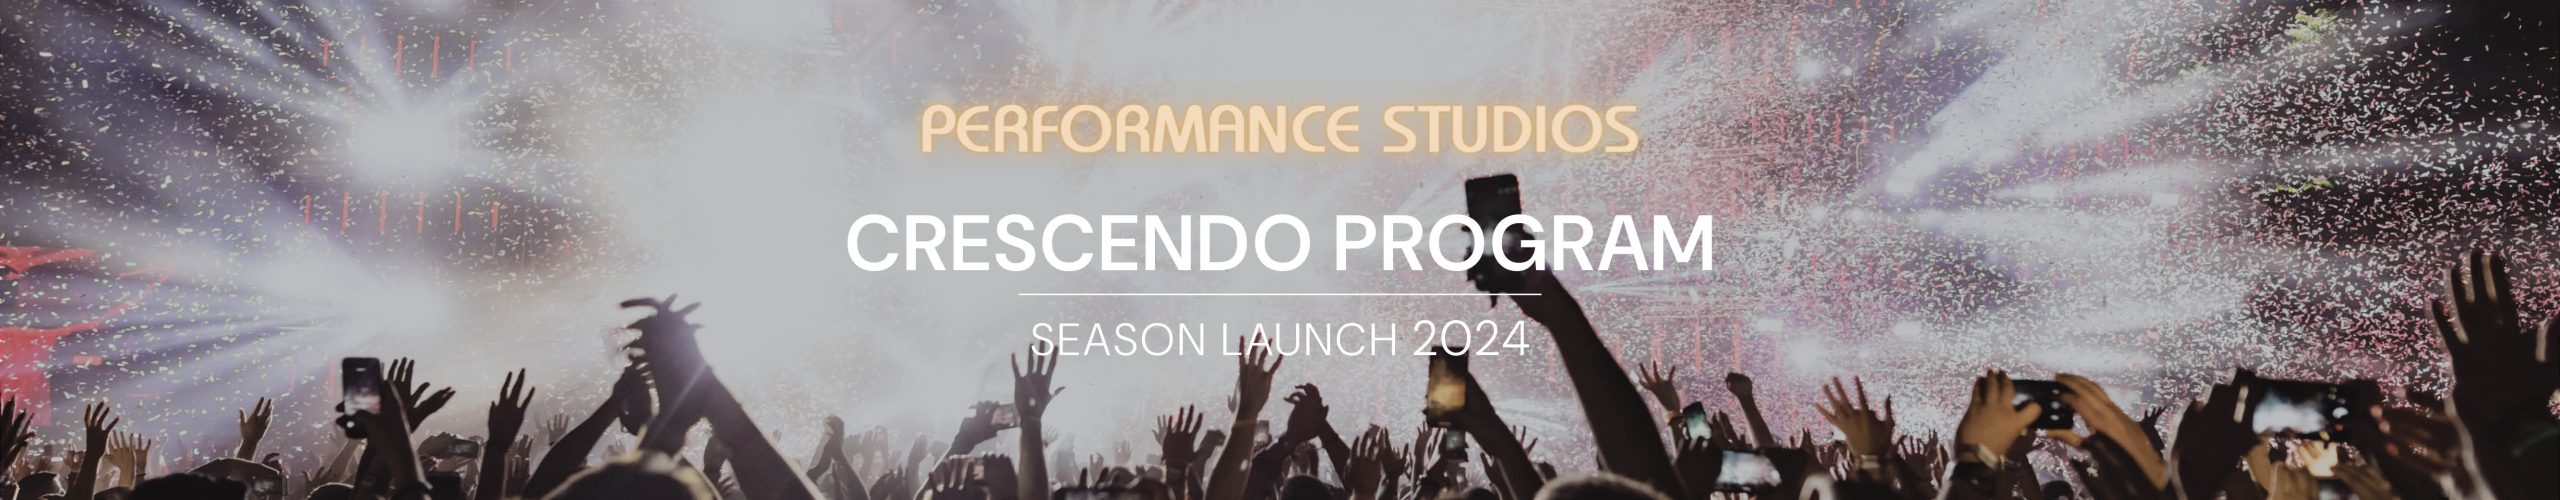 PS_Crescendo Program_Website Banner